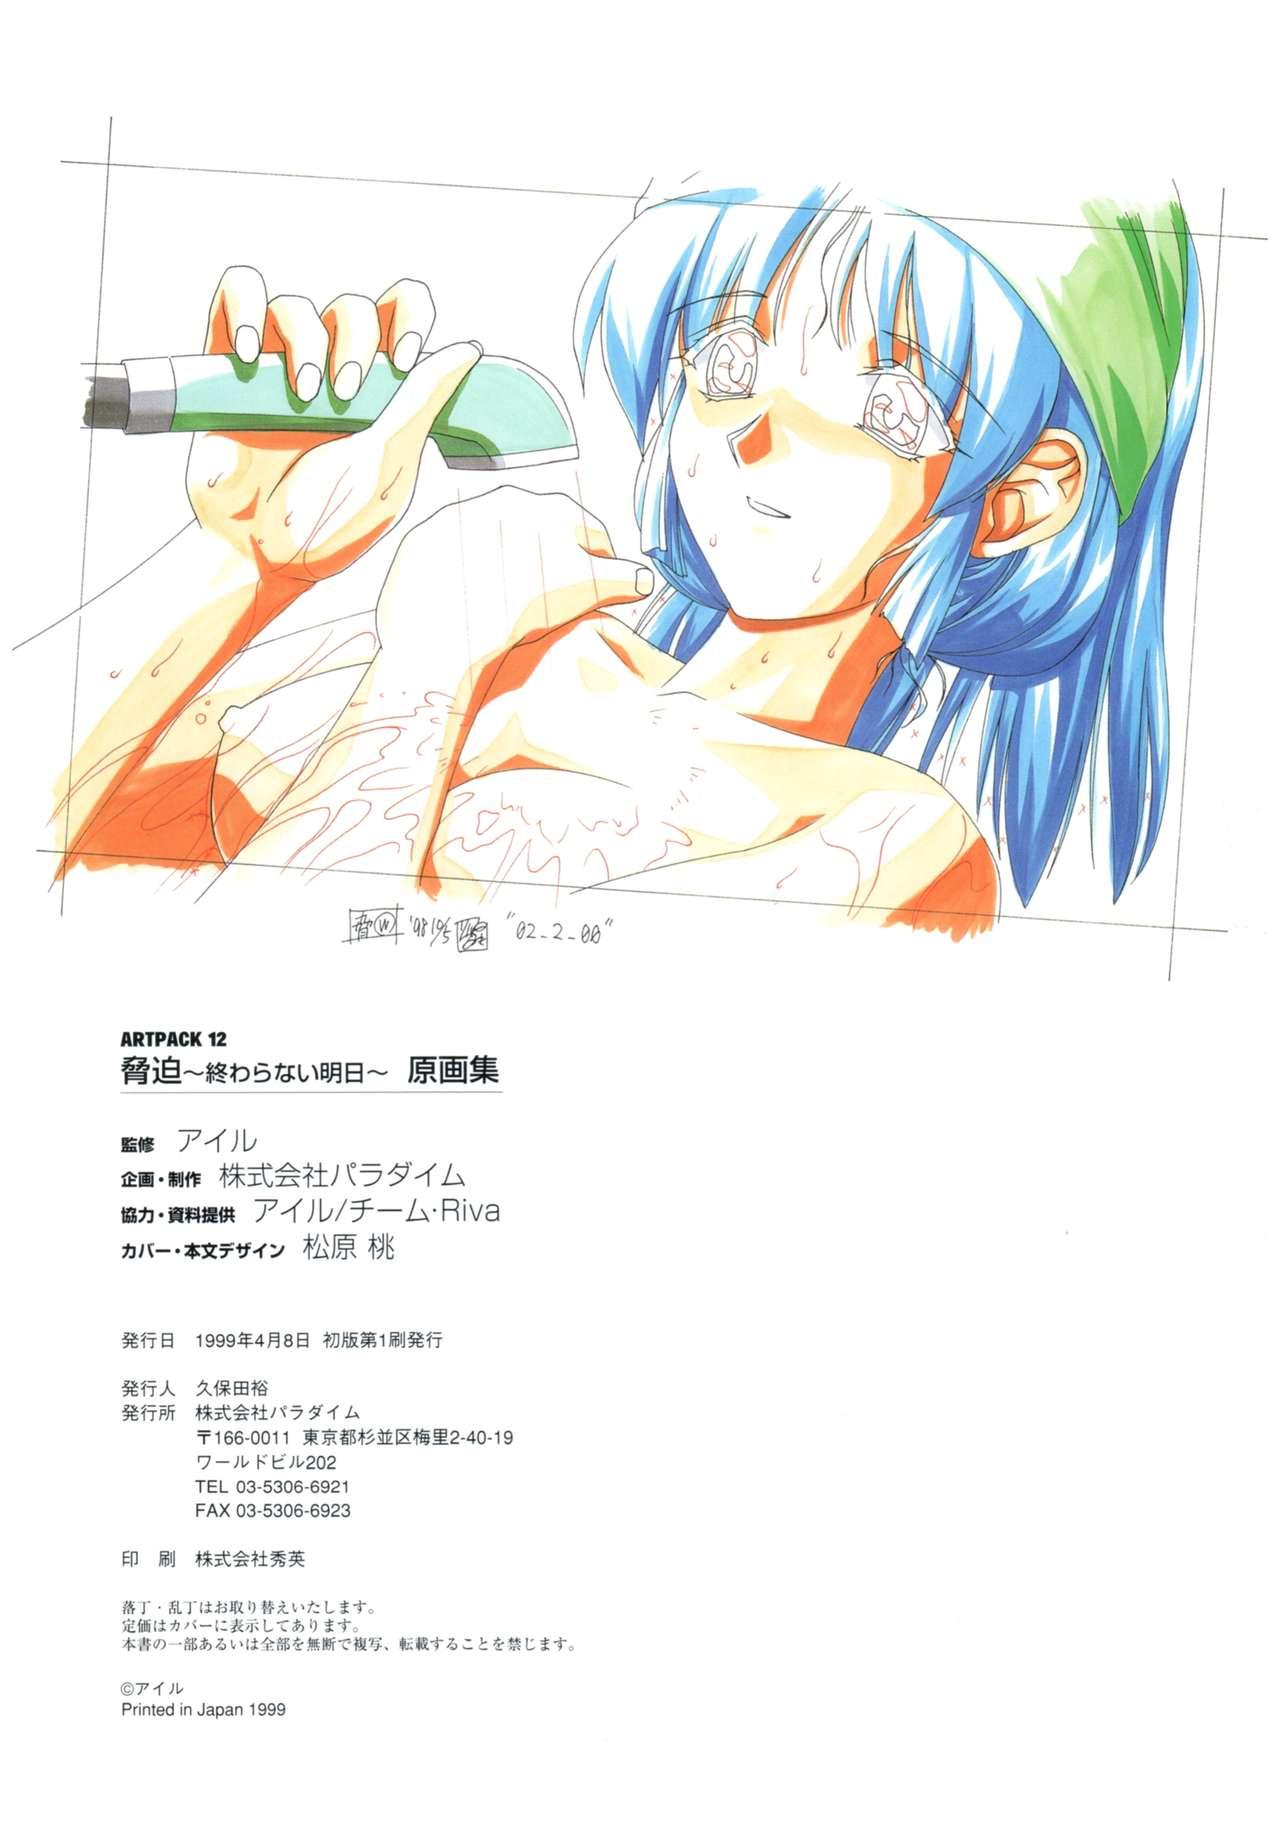 Kyouhaku Owaranai Asu original illustration art book 84